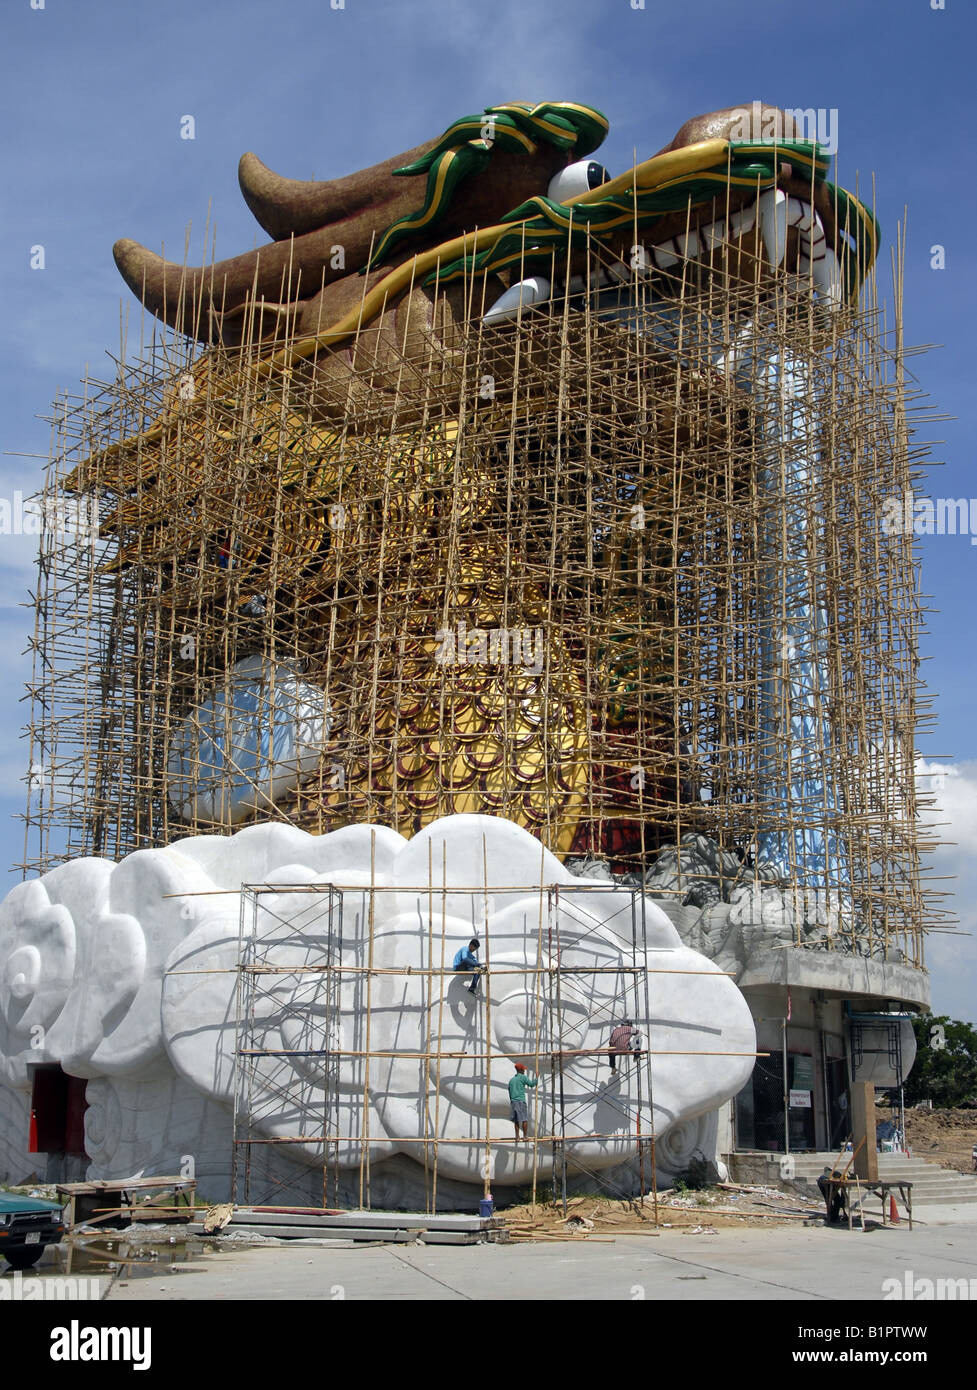 Dragon chinois/thaï temple de naga en construction, Suphanburi/Suphan Buri, Thaïlande Banque D'Images